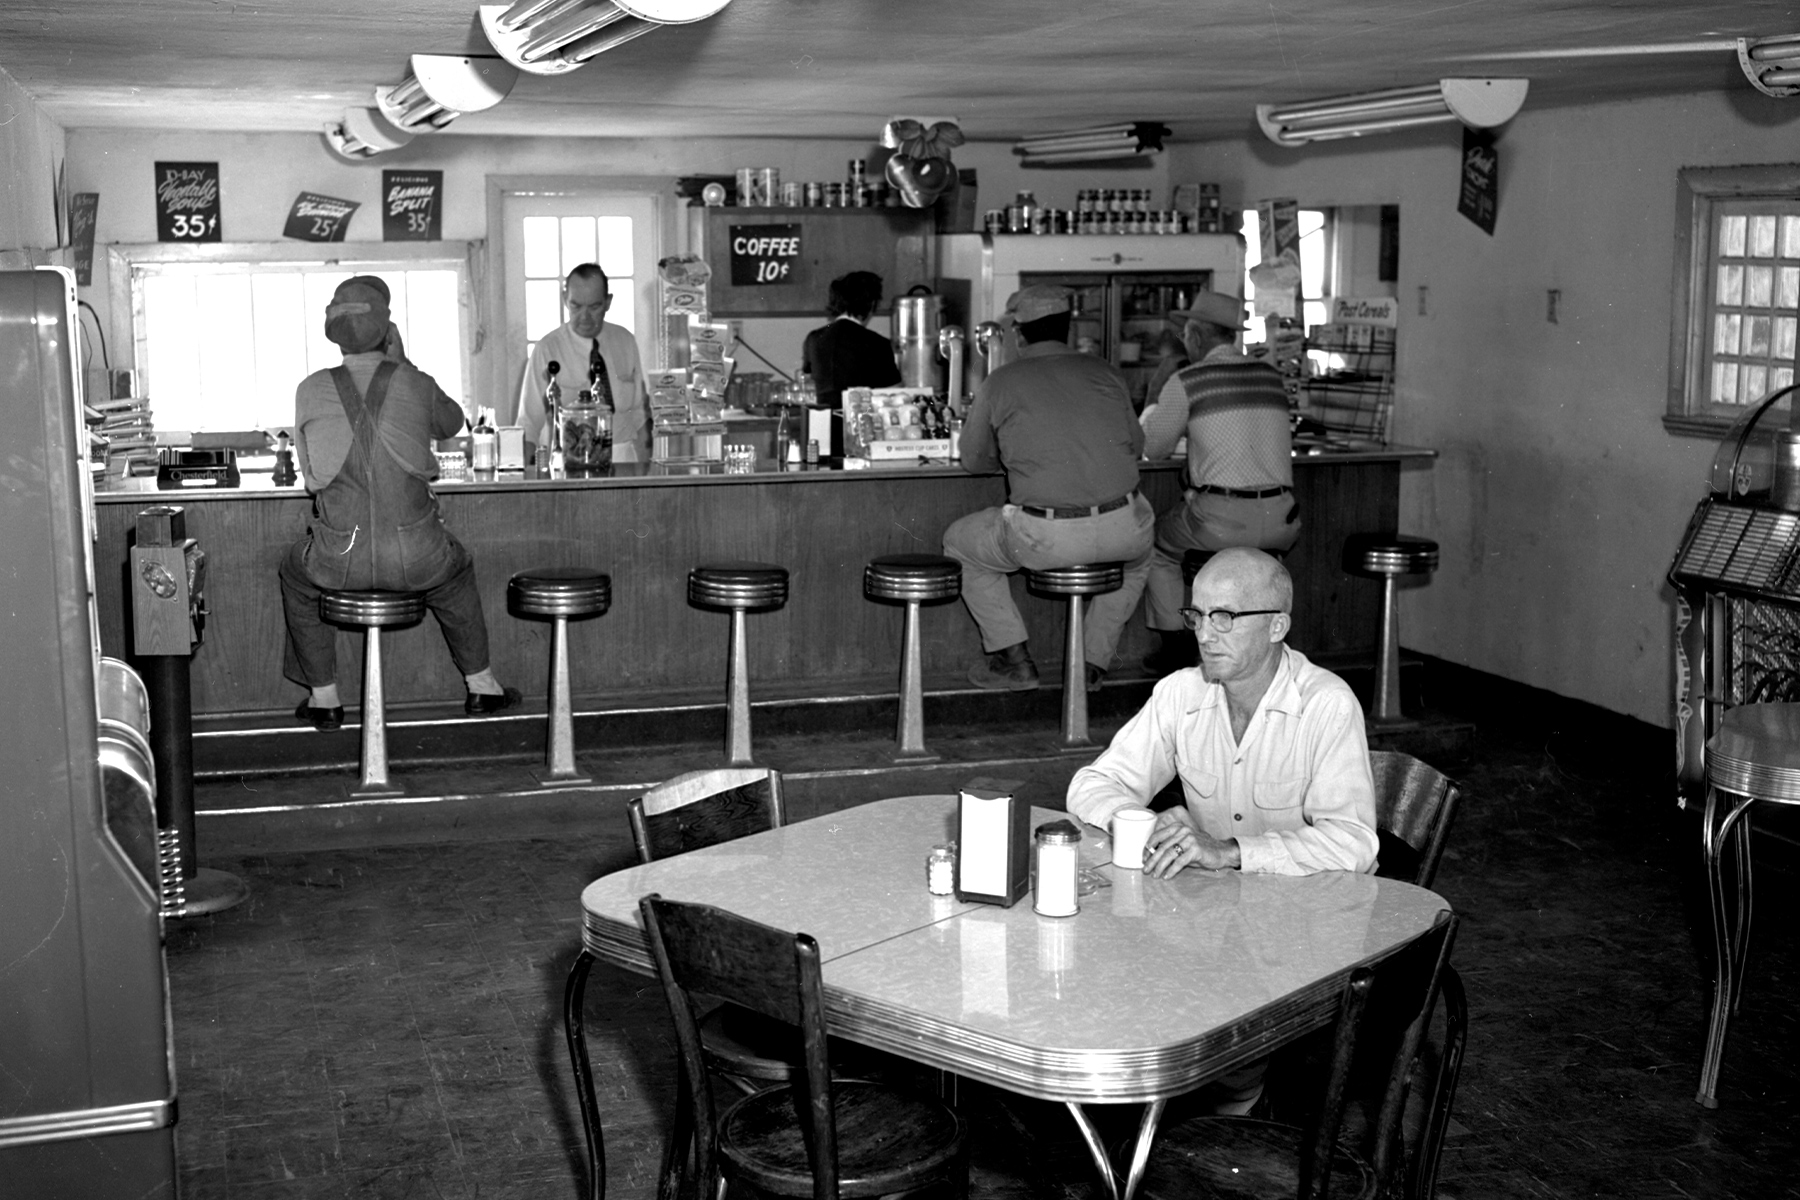 PHOTOS: Neiman Marcus' first suburban store in 1951 - Preston Hollow